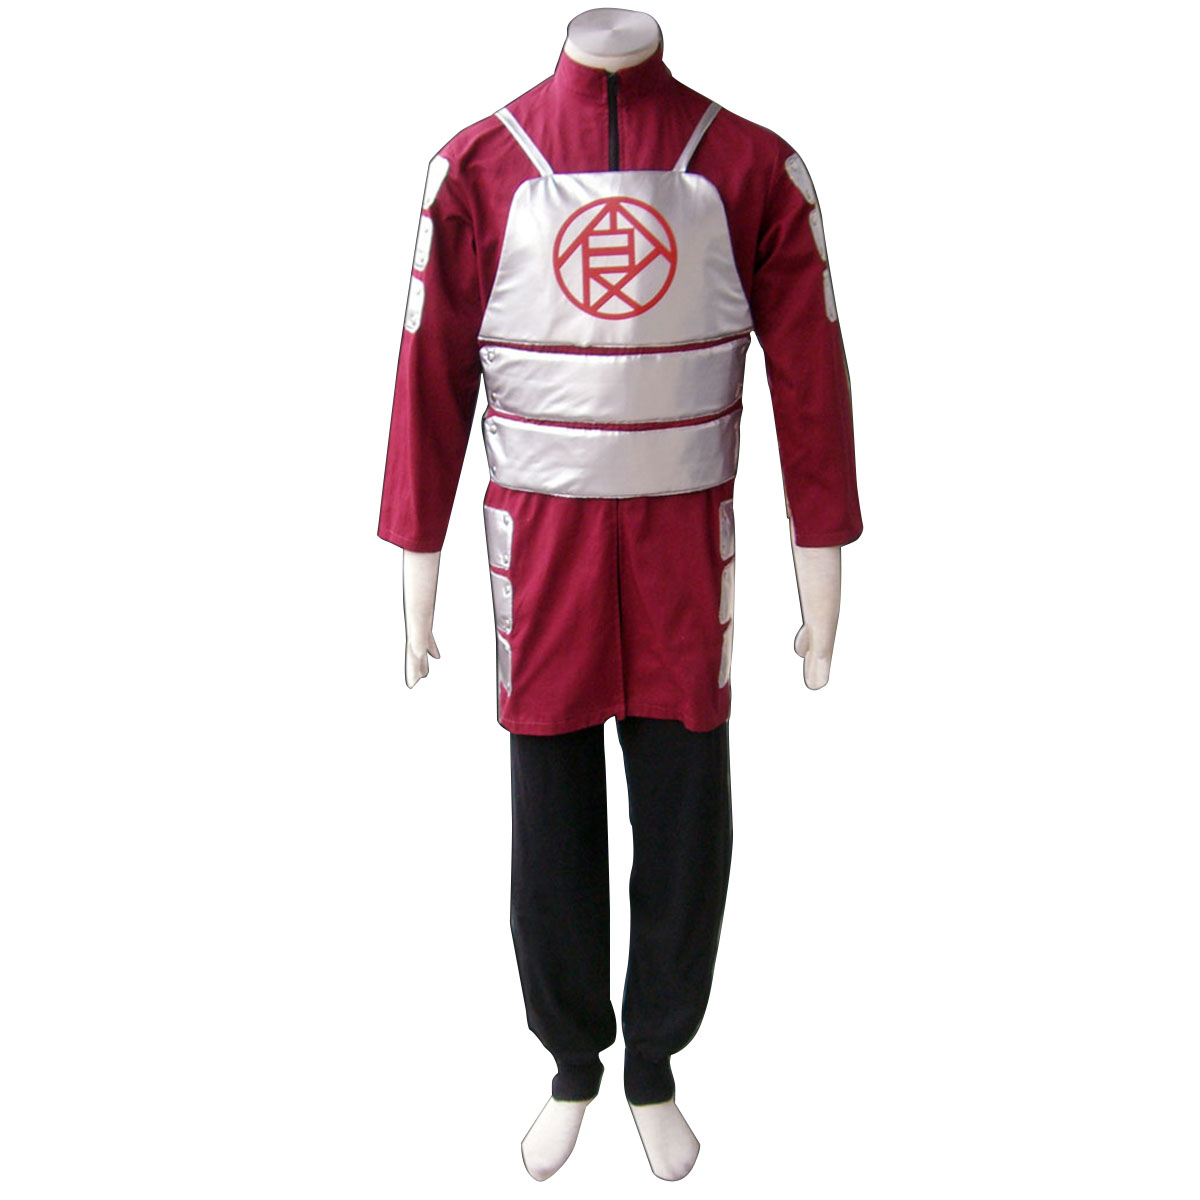 Naruto Shippuden Choji Akimichi 2 Anime Cosplay Costumes Outfit